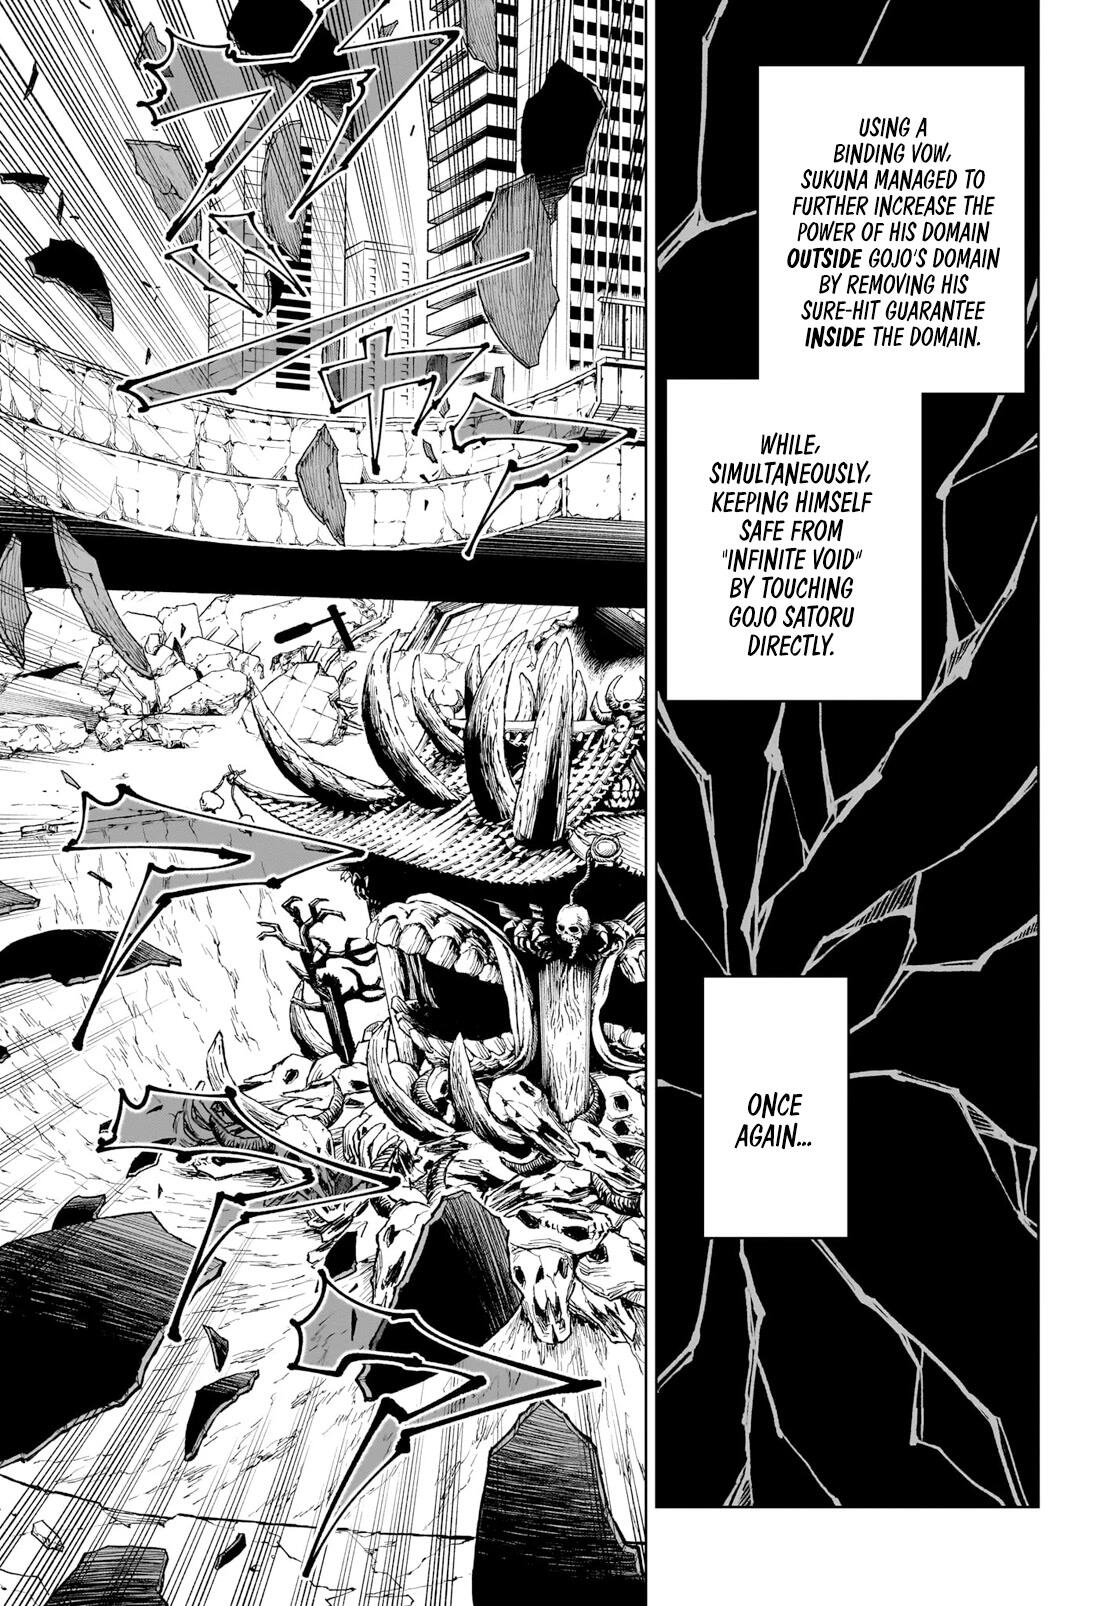 Jujutsu Kaisen Chapter 227: The Decisive Battle In The Uninhabited, Demon-Infested Shinjuku ⑤ page 14 - Mangakakalot